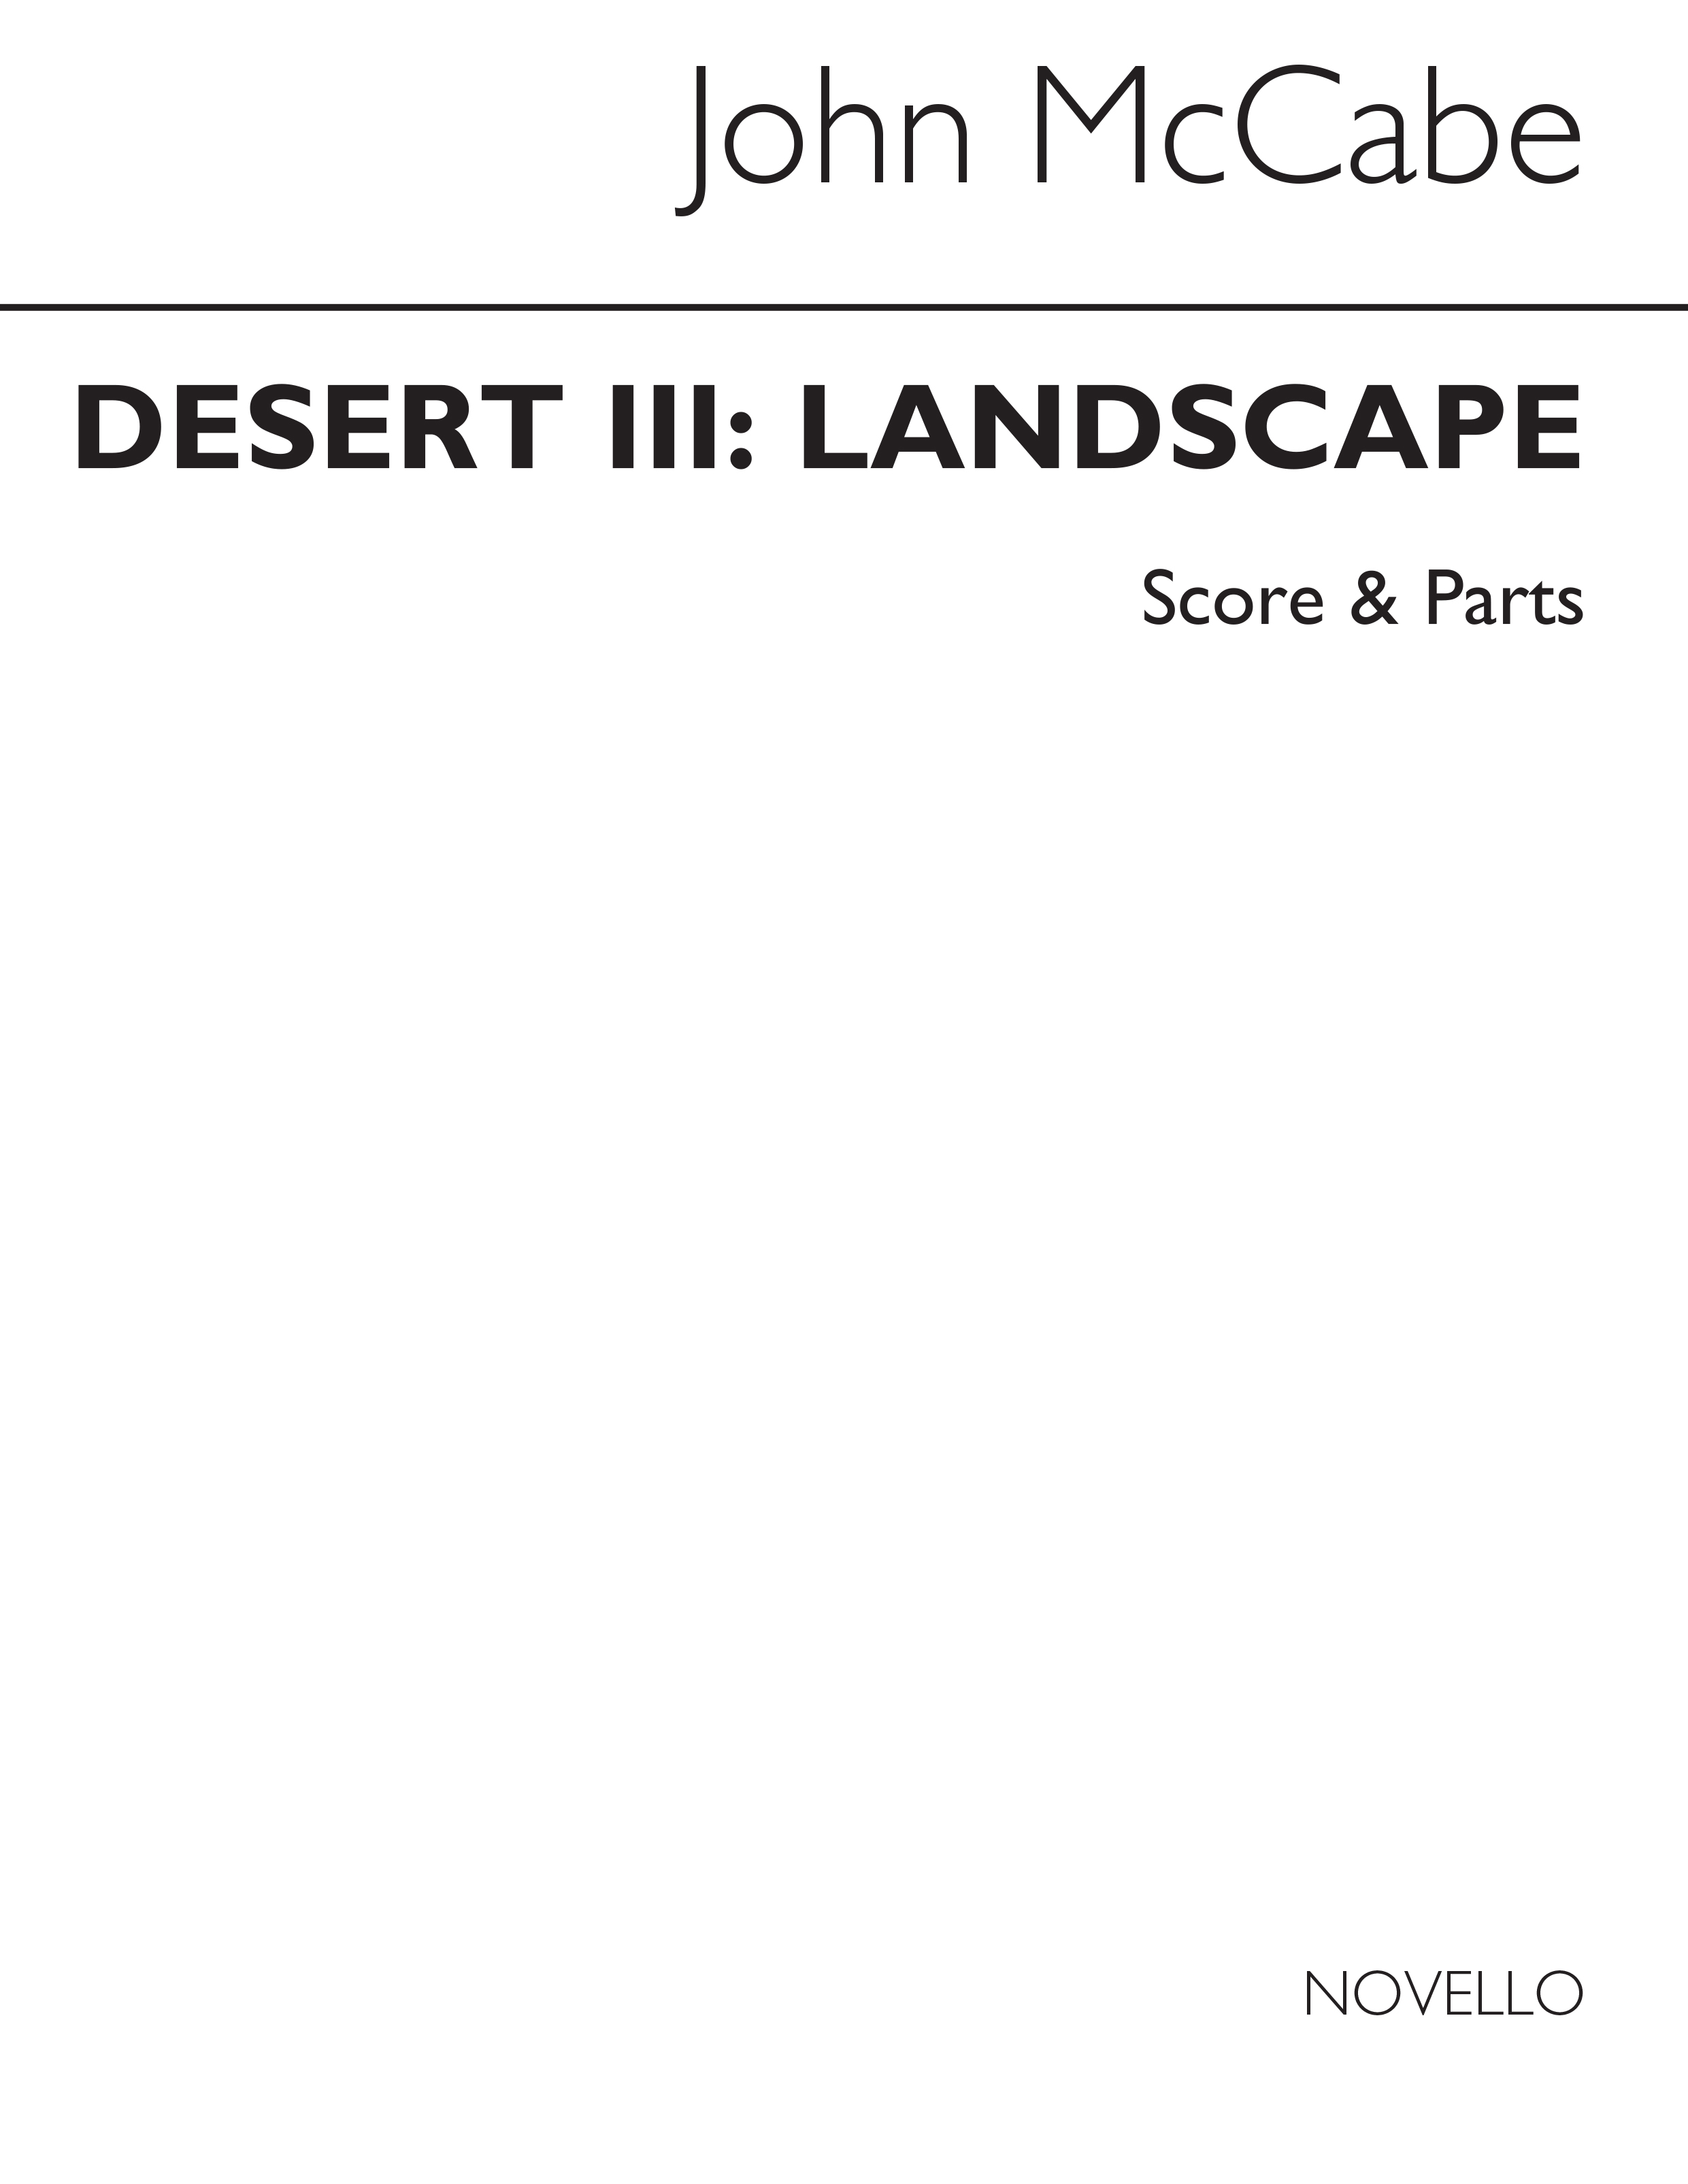 McCabe: Desert III: Landscape